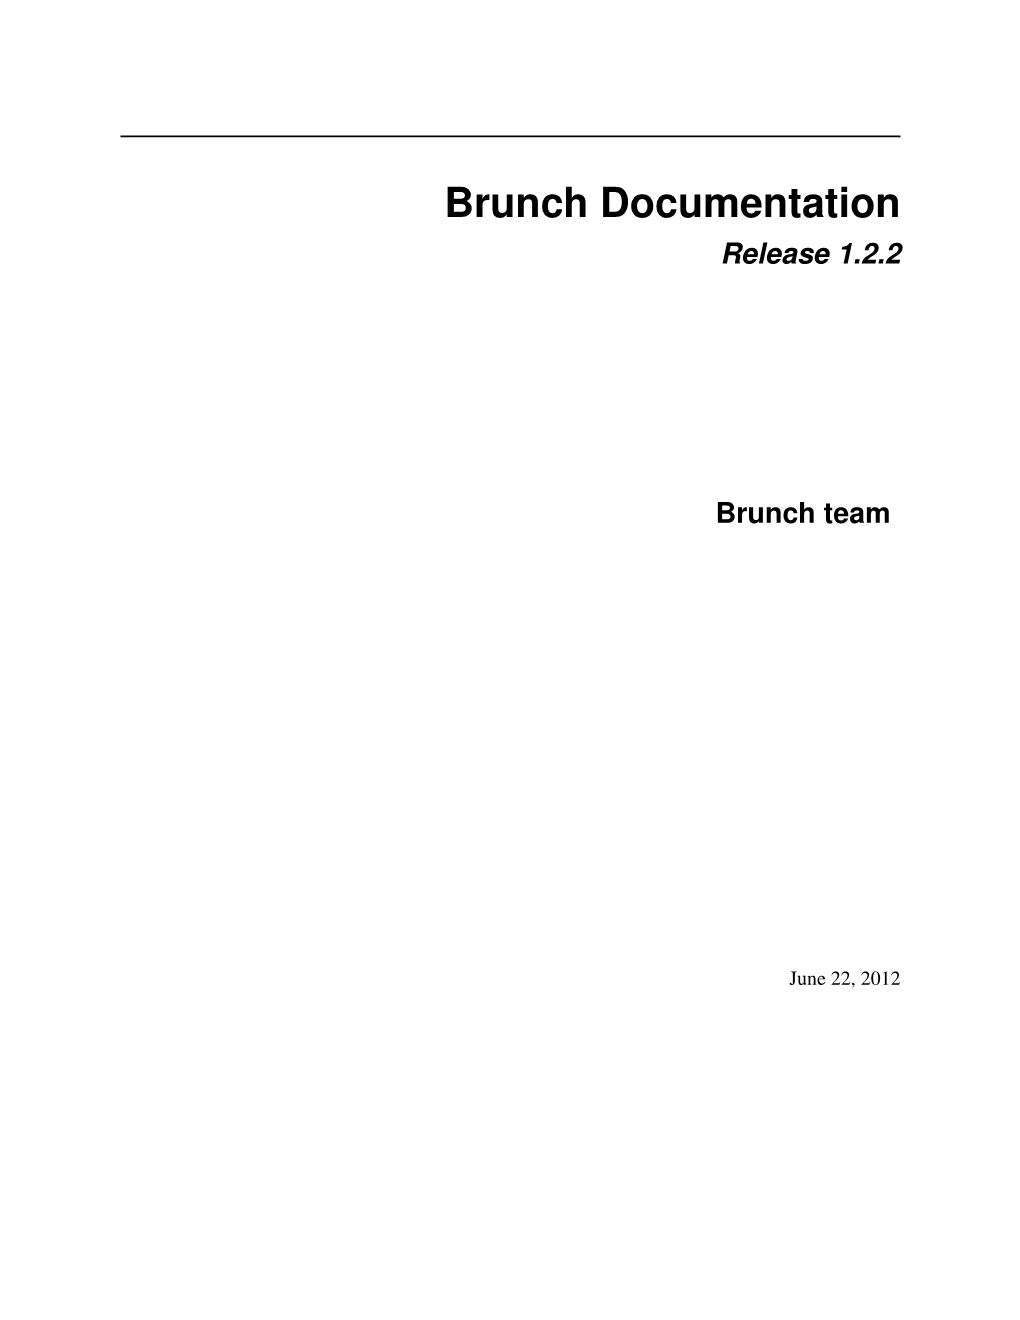 Brunch Documentation Release 1.2.2